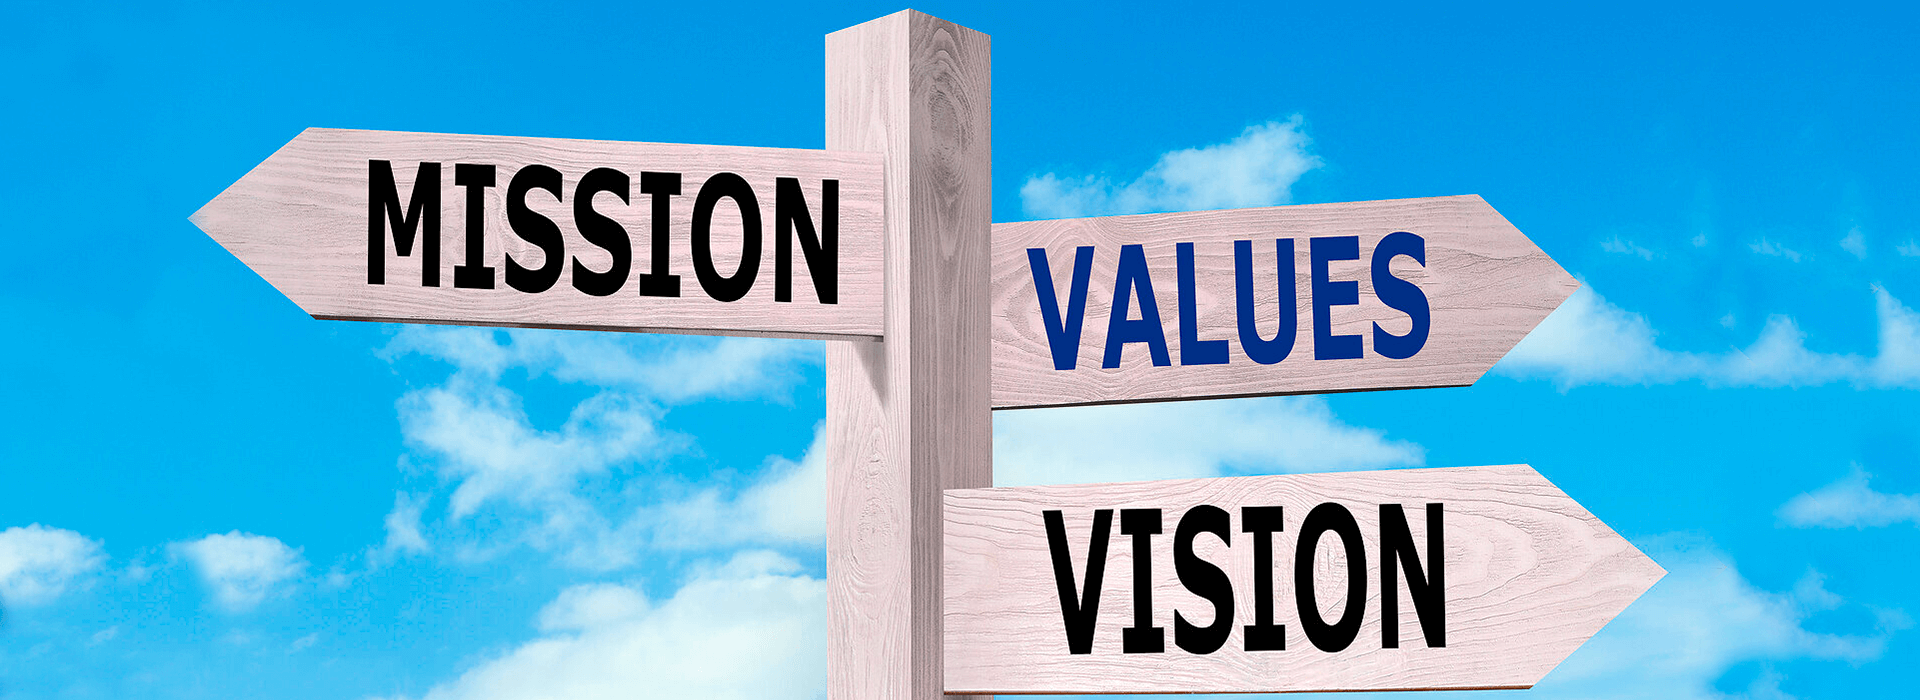 mission+vision+values